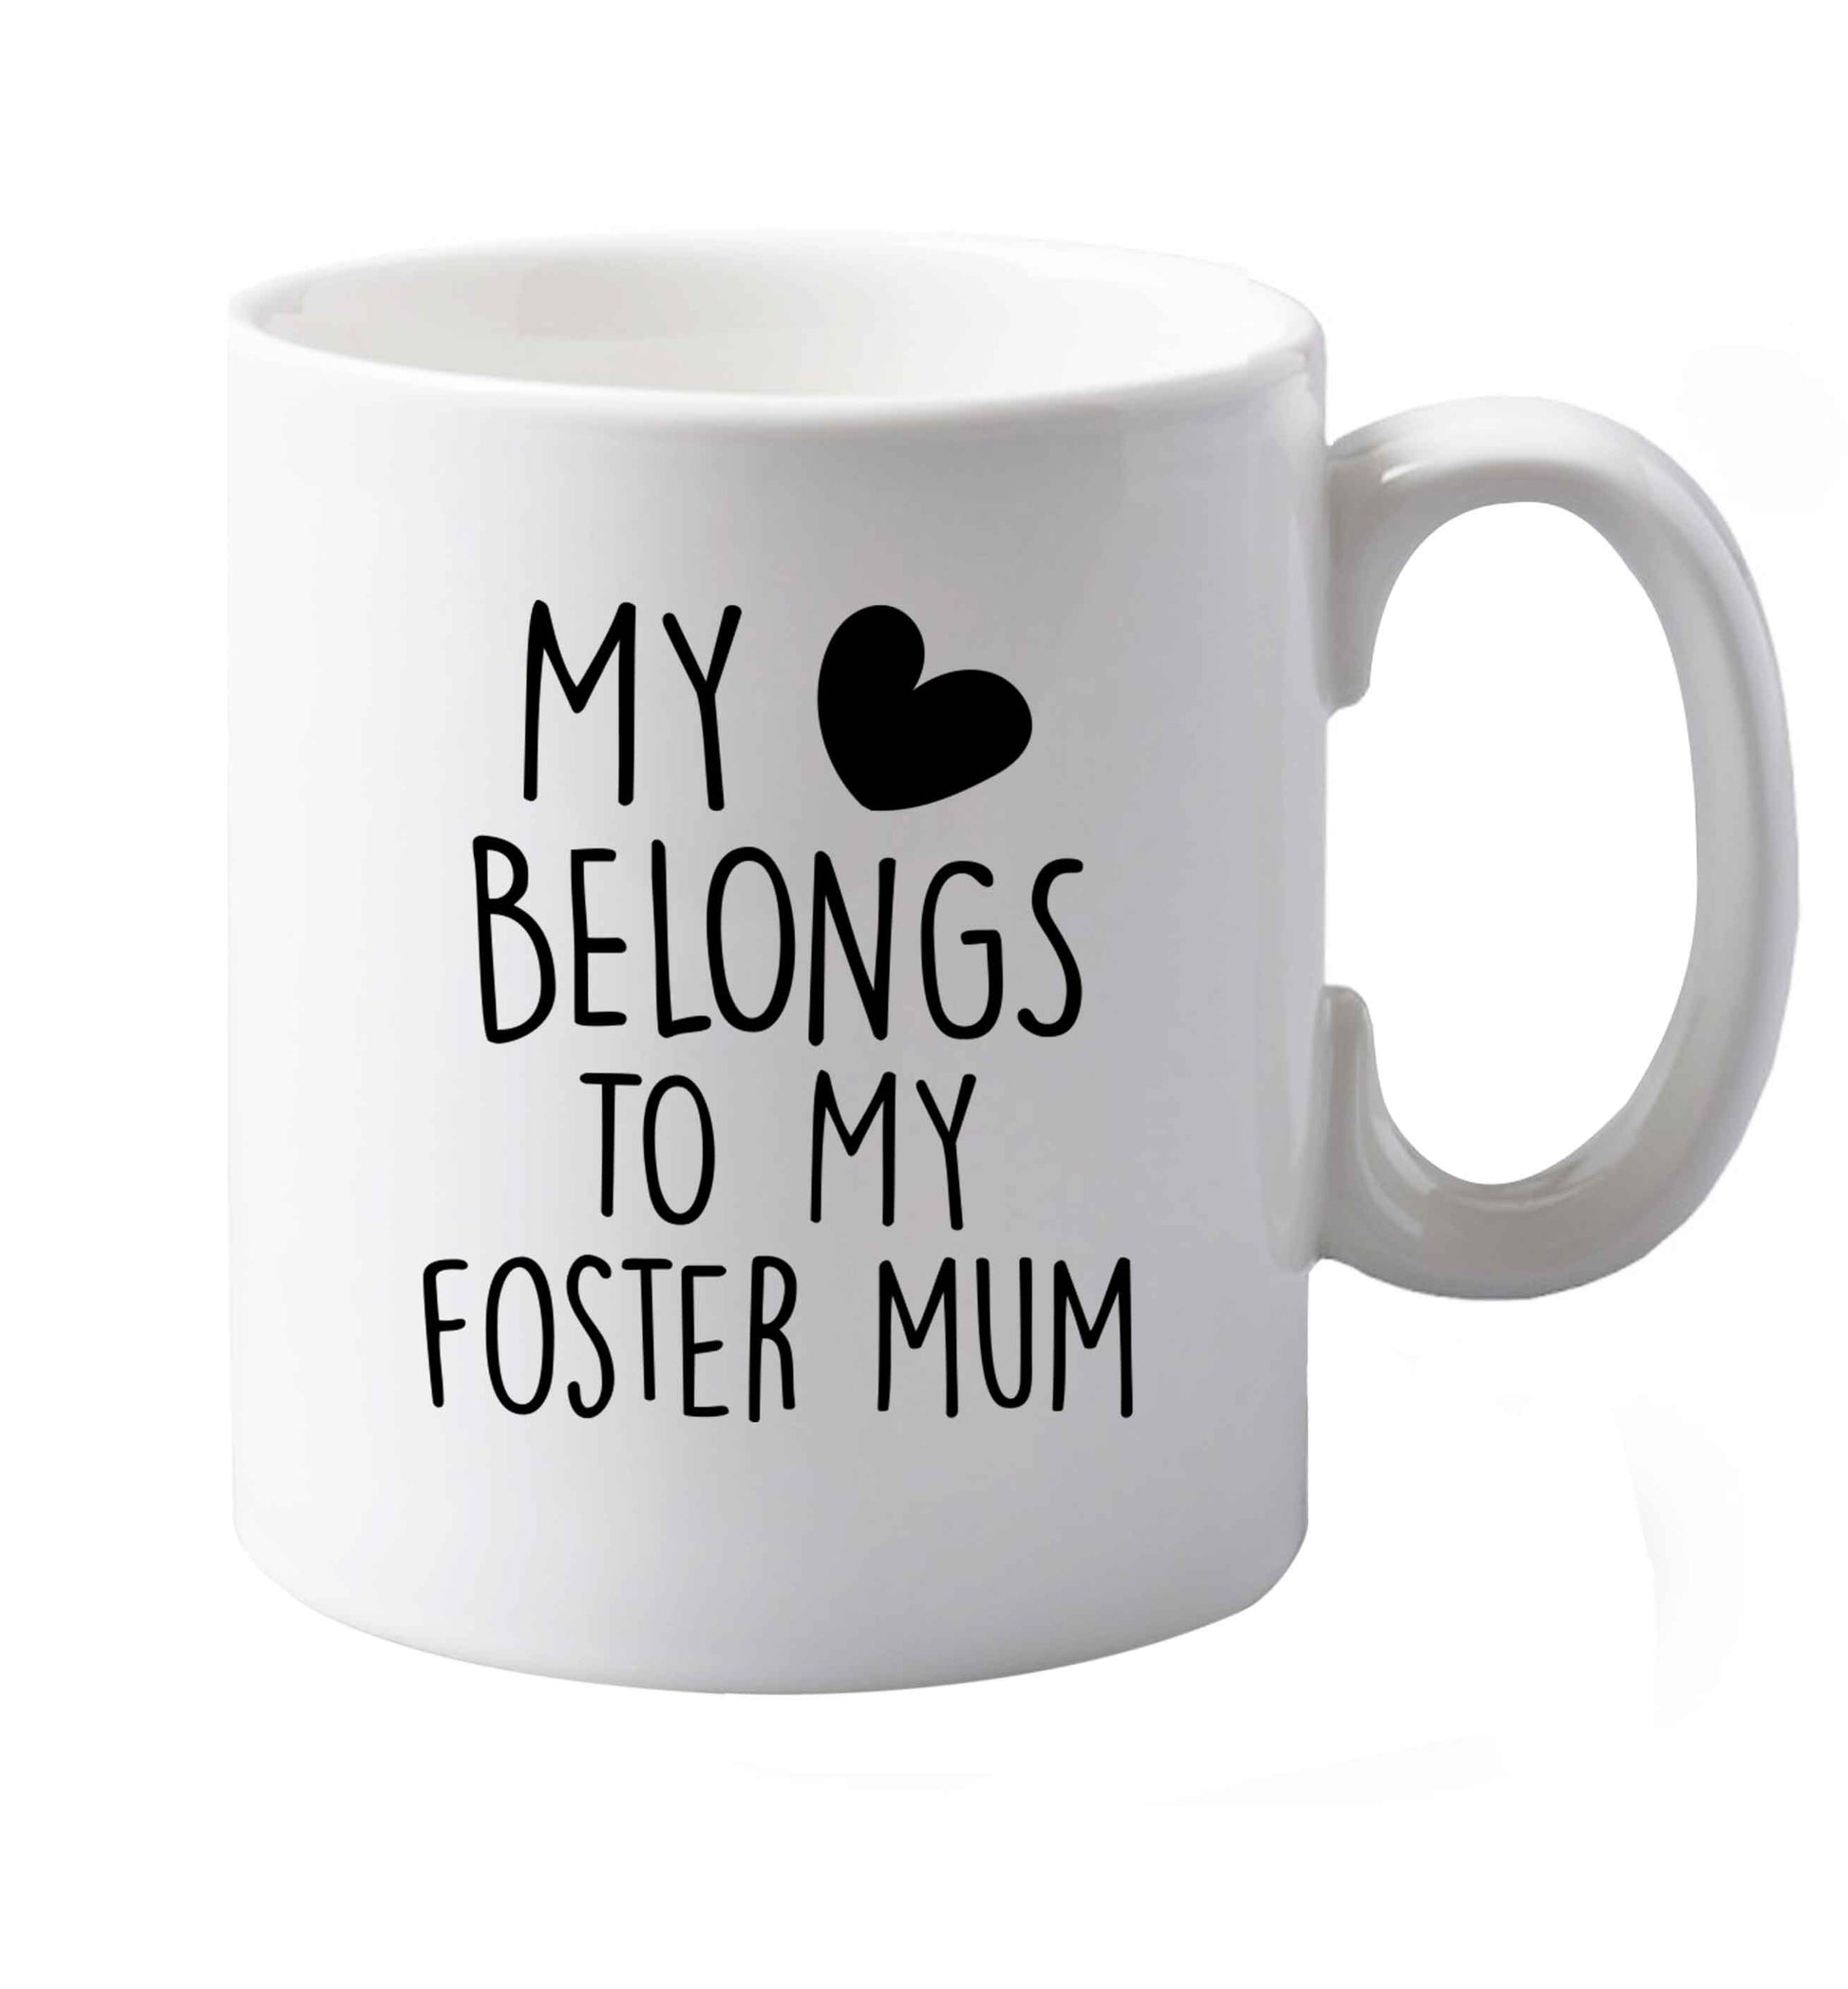 10 oz My heart belongs to my foster mum ceramic mug both sides